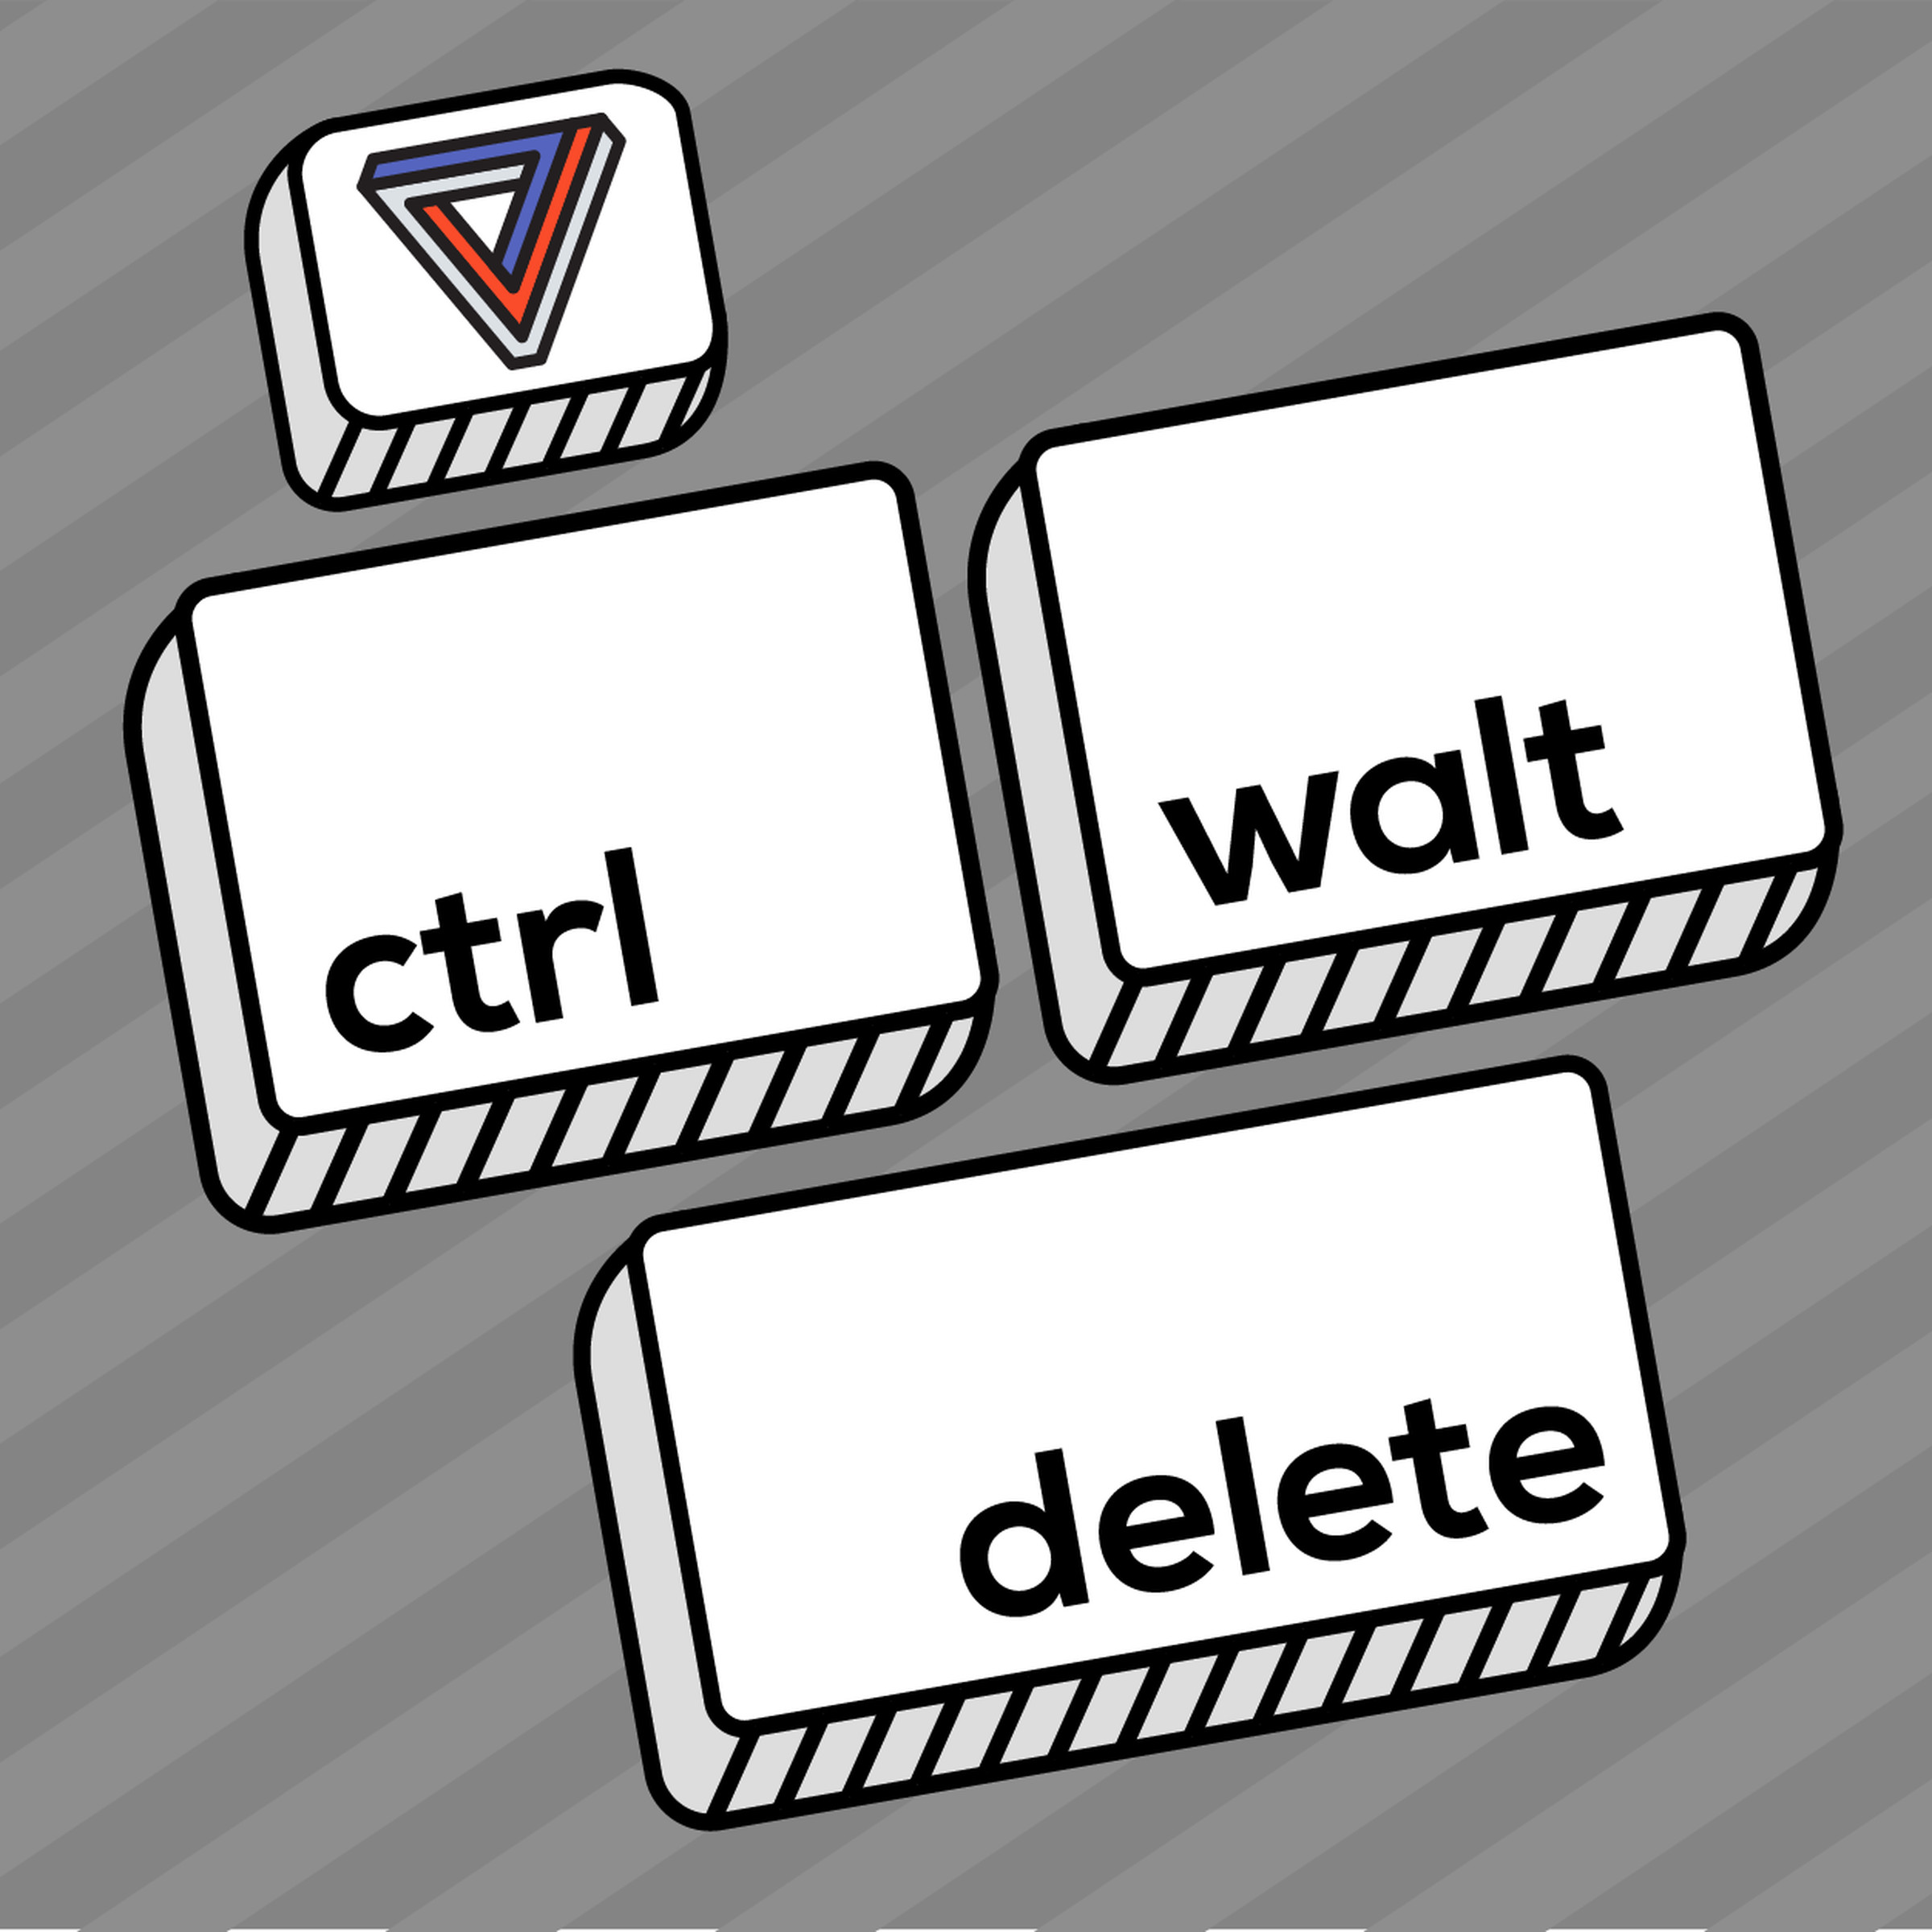 ctrl-walt-delete-logo-wider